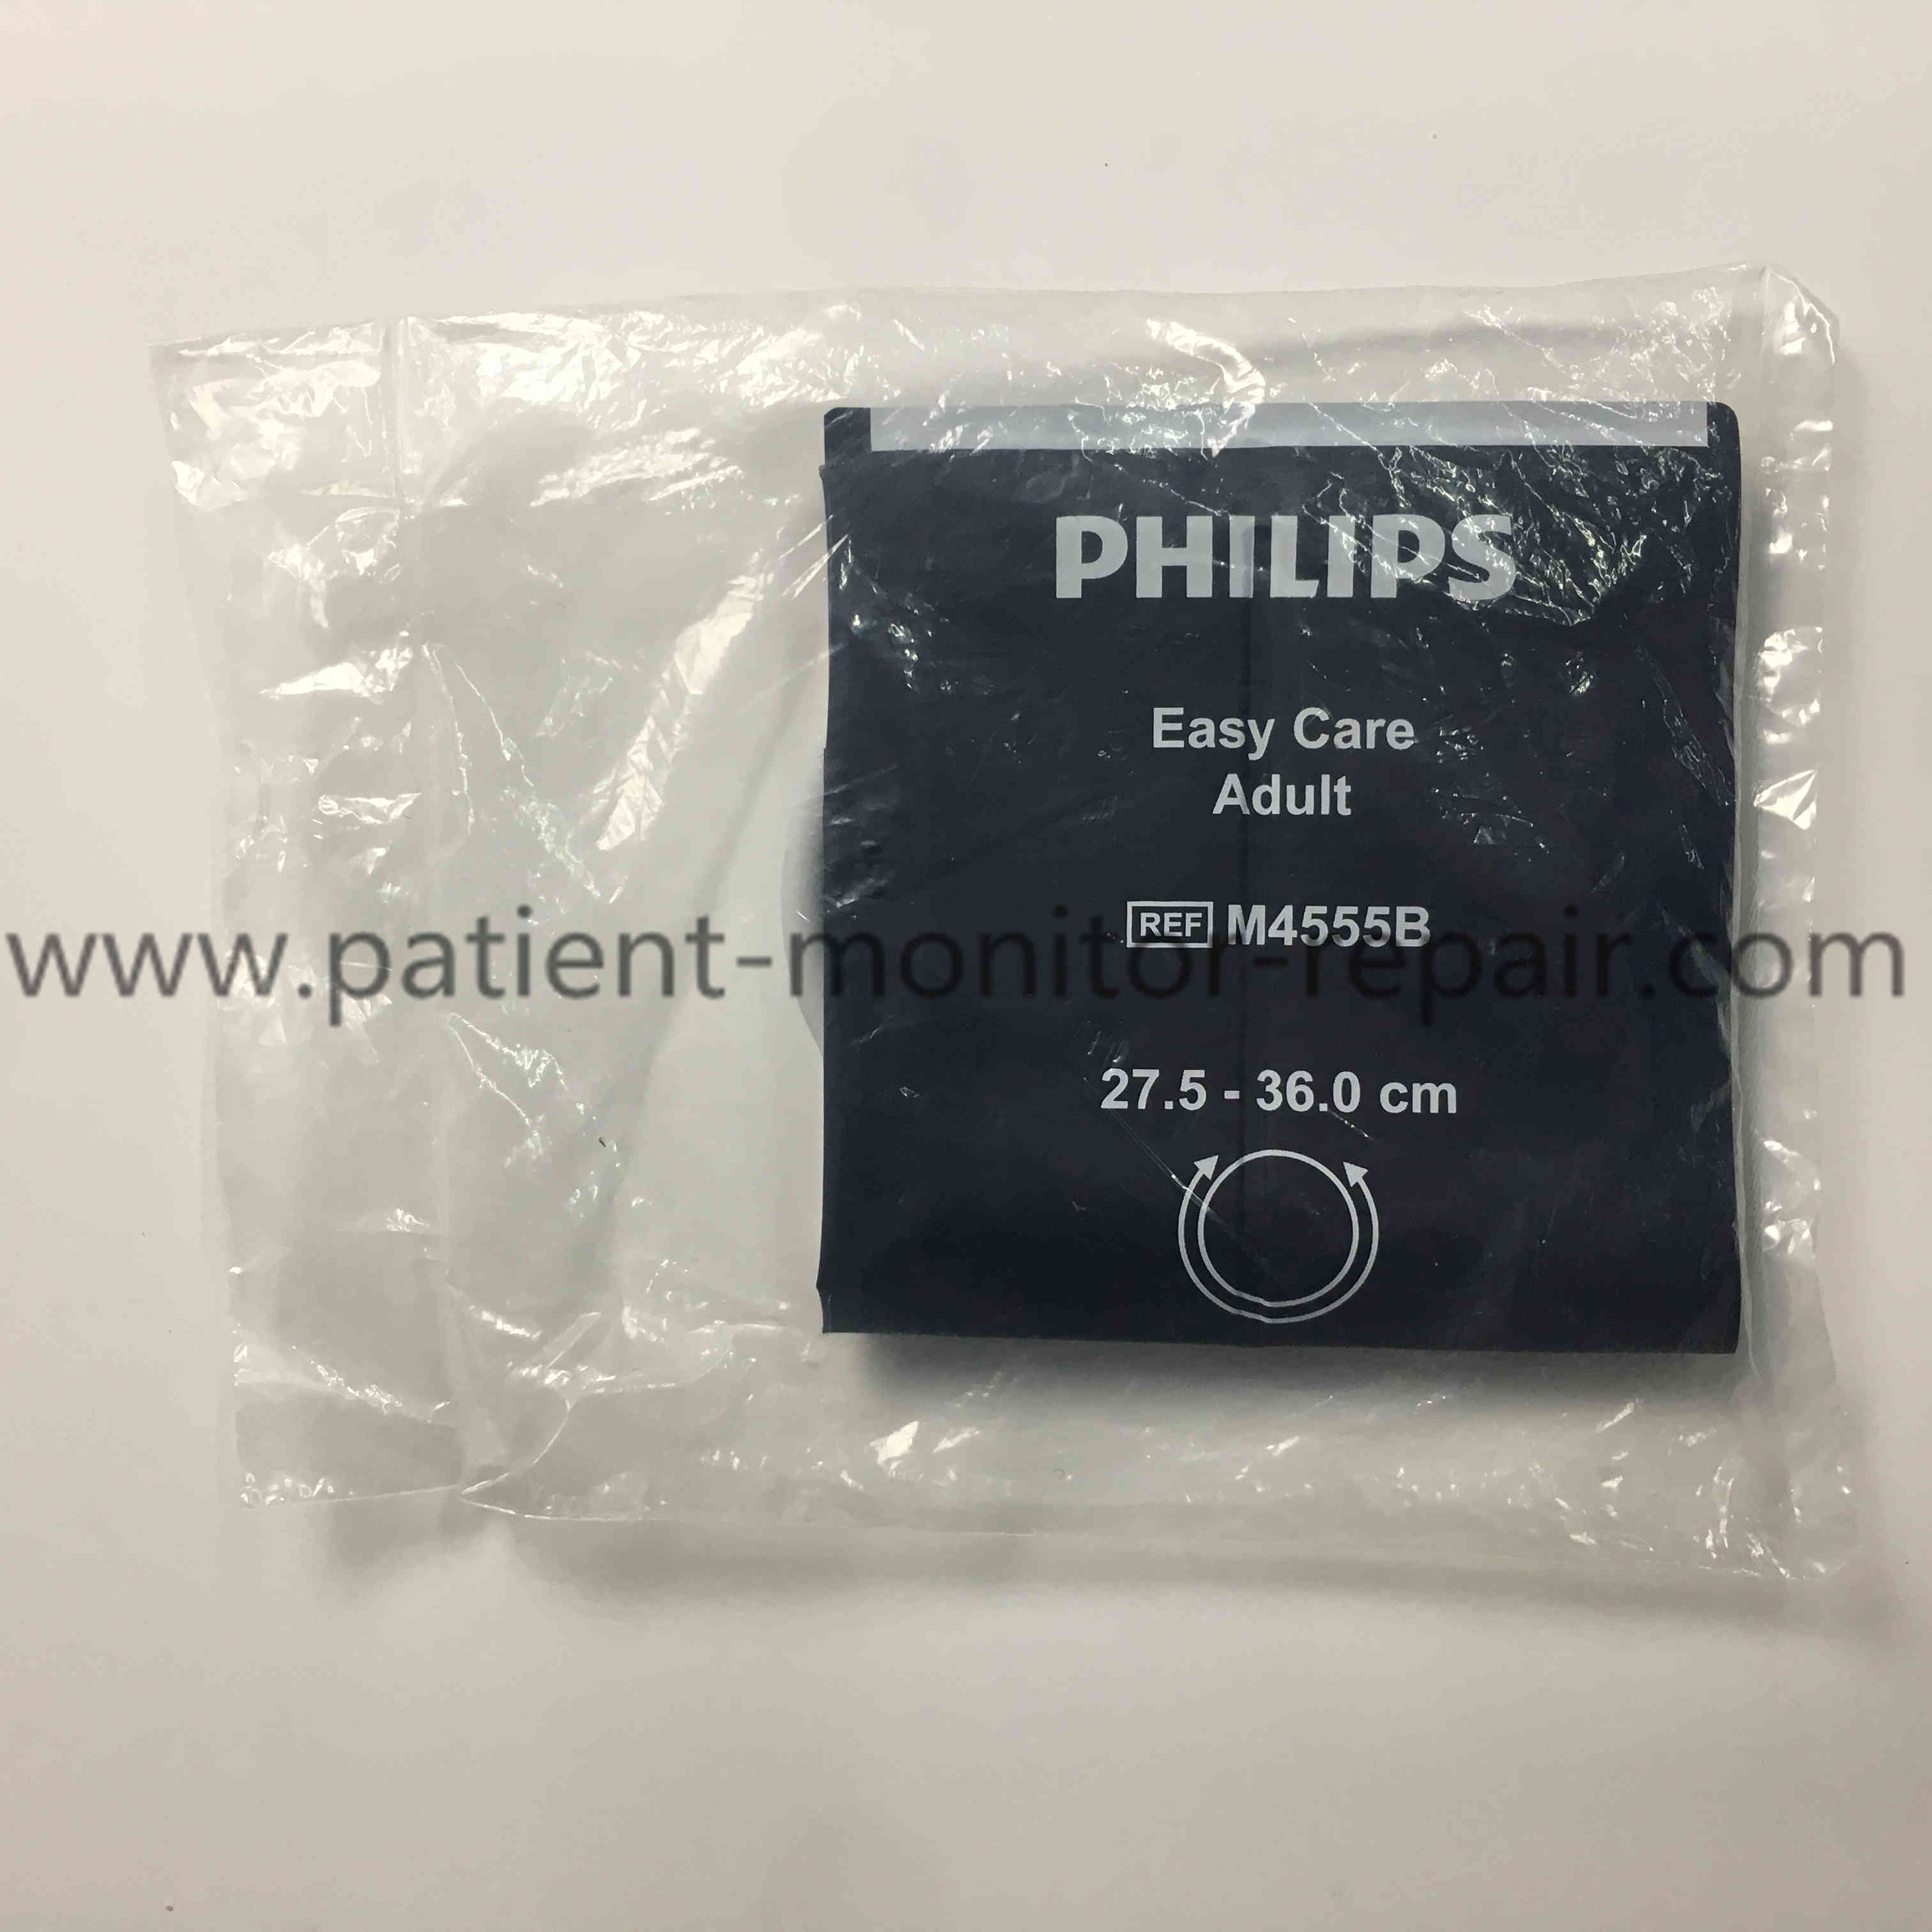 Philips Easy Care Cuff, Adult, 1 hose 27.5-36.0cm M4555B 989803147871 - 1.jpg